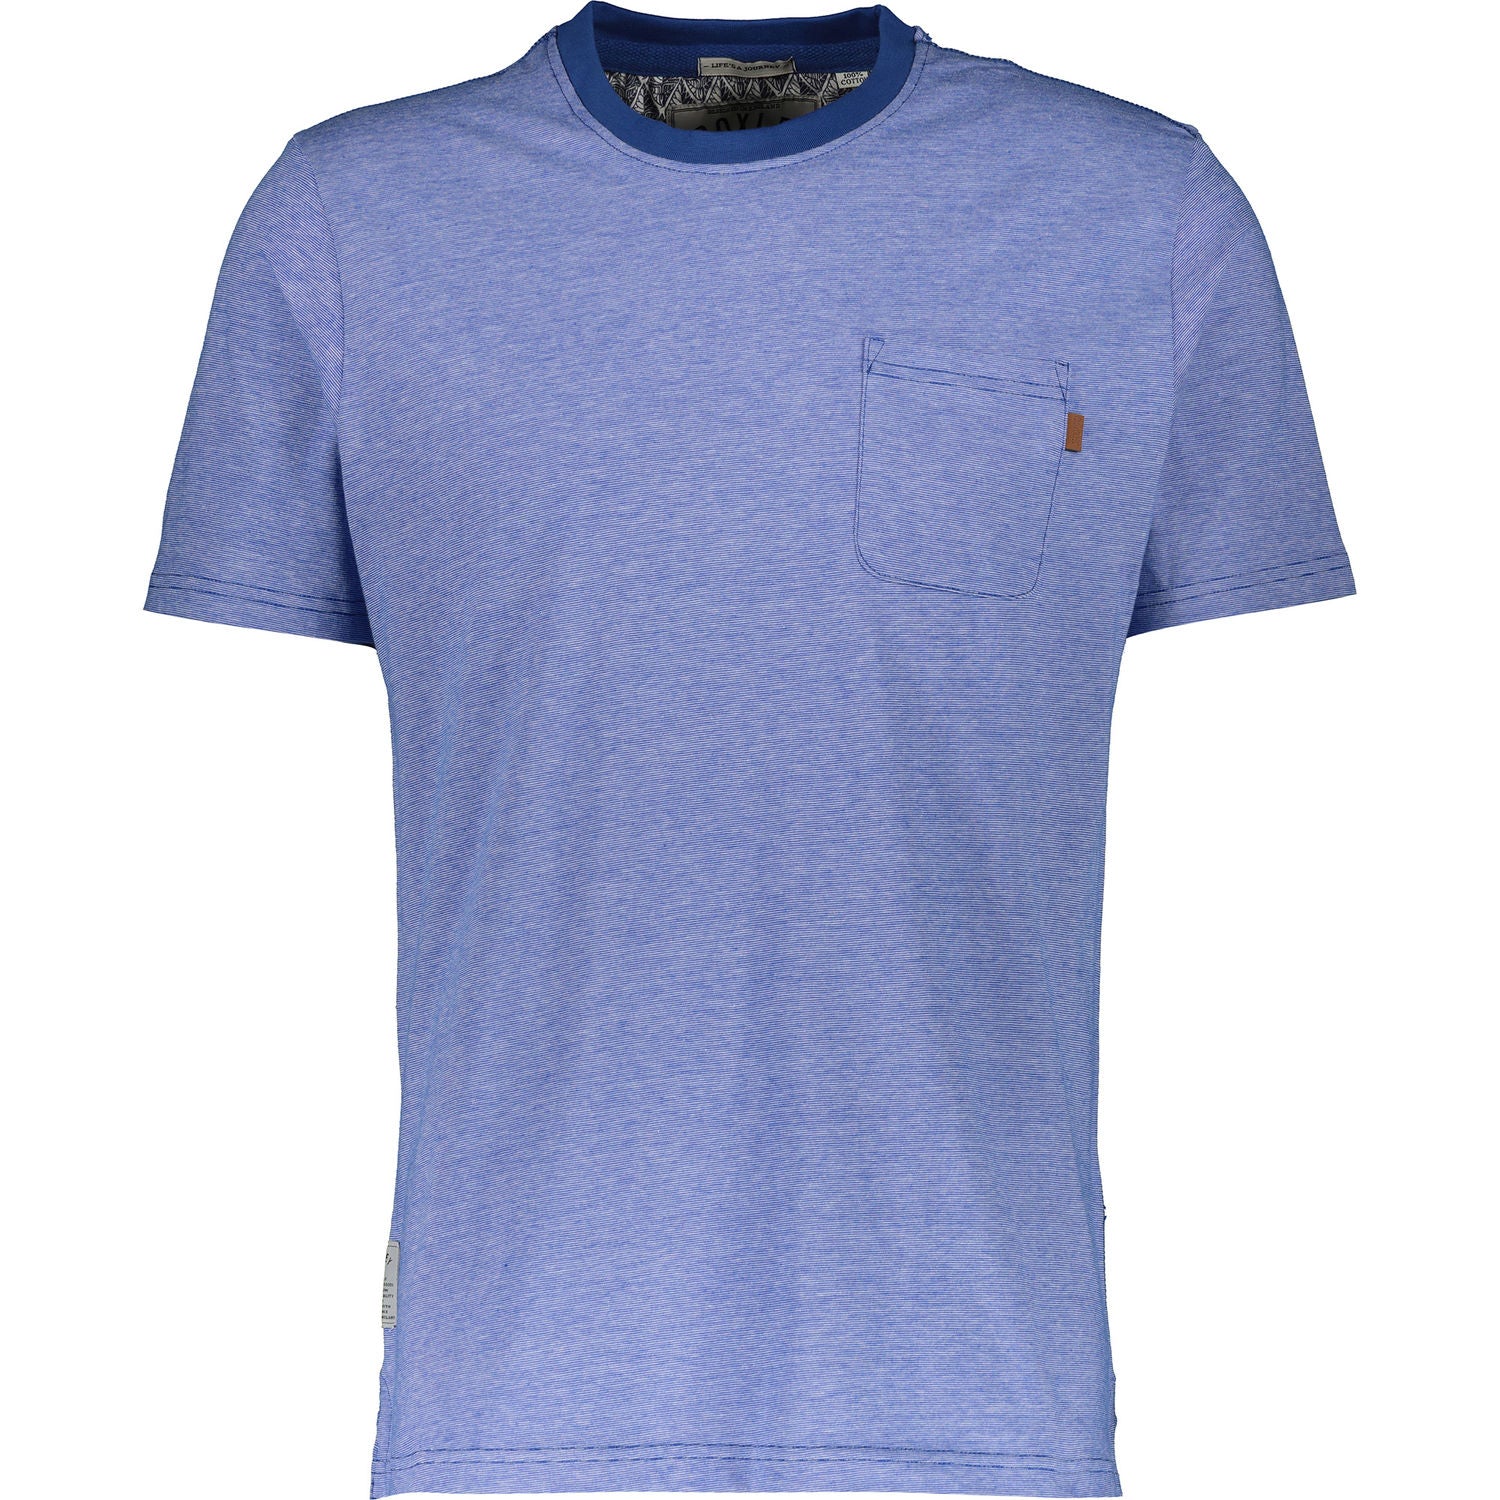 Croxley - Bourne T-Shirt - LabelledUp.com